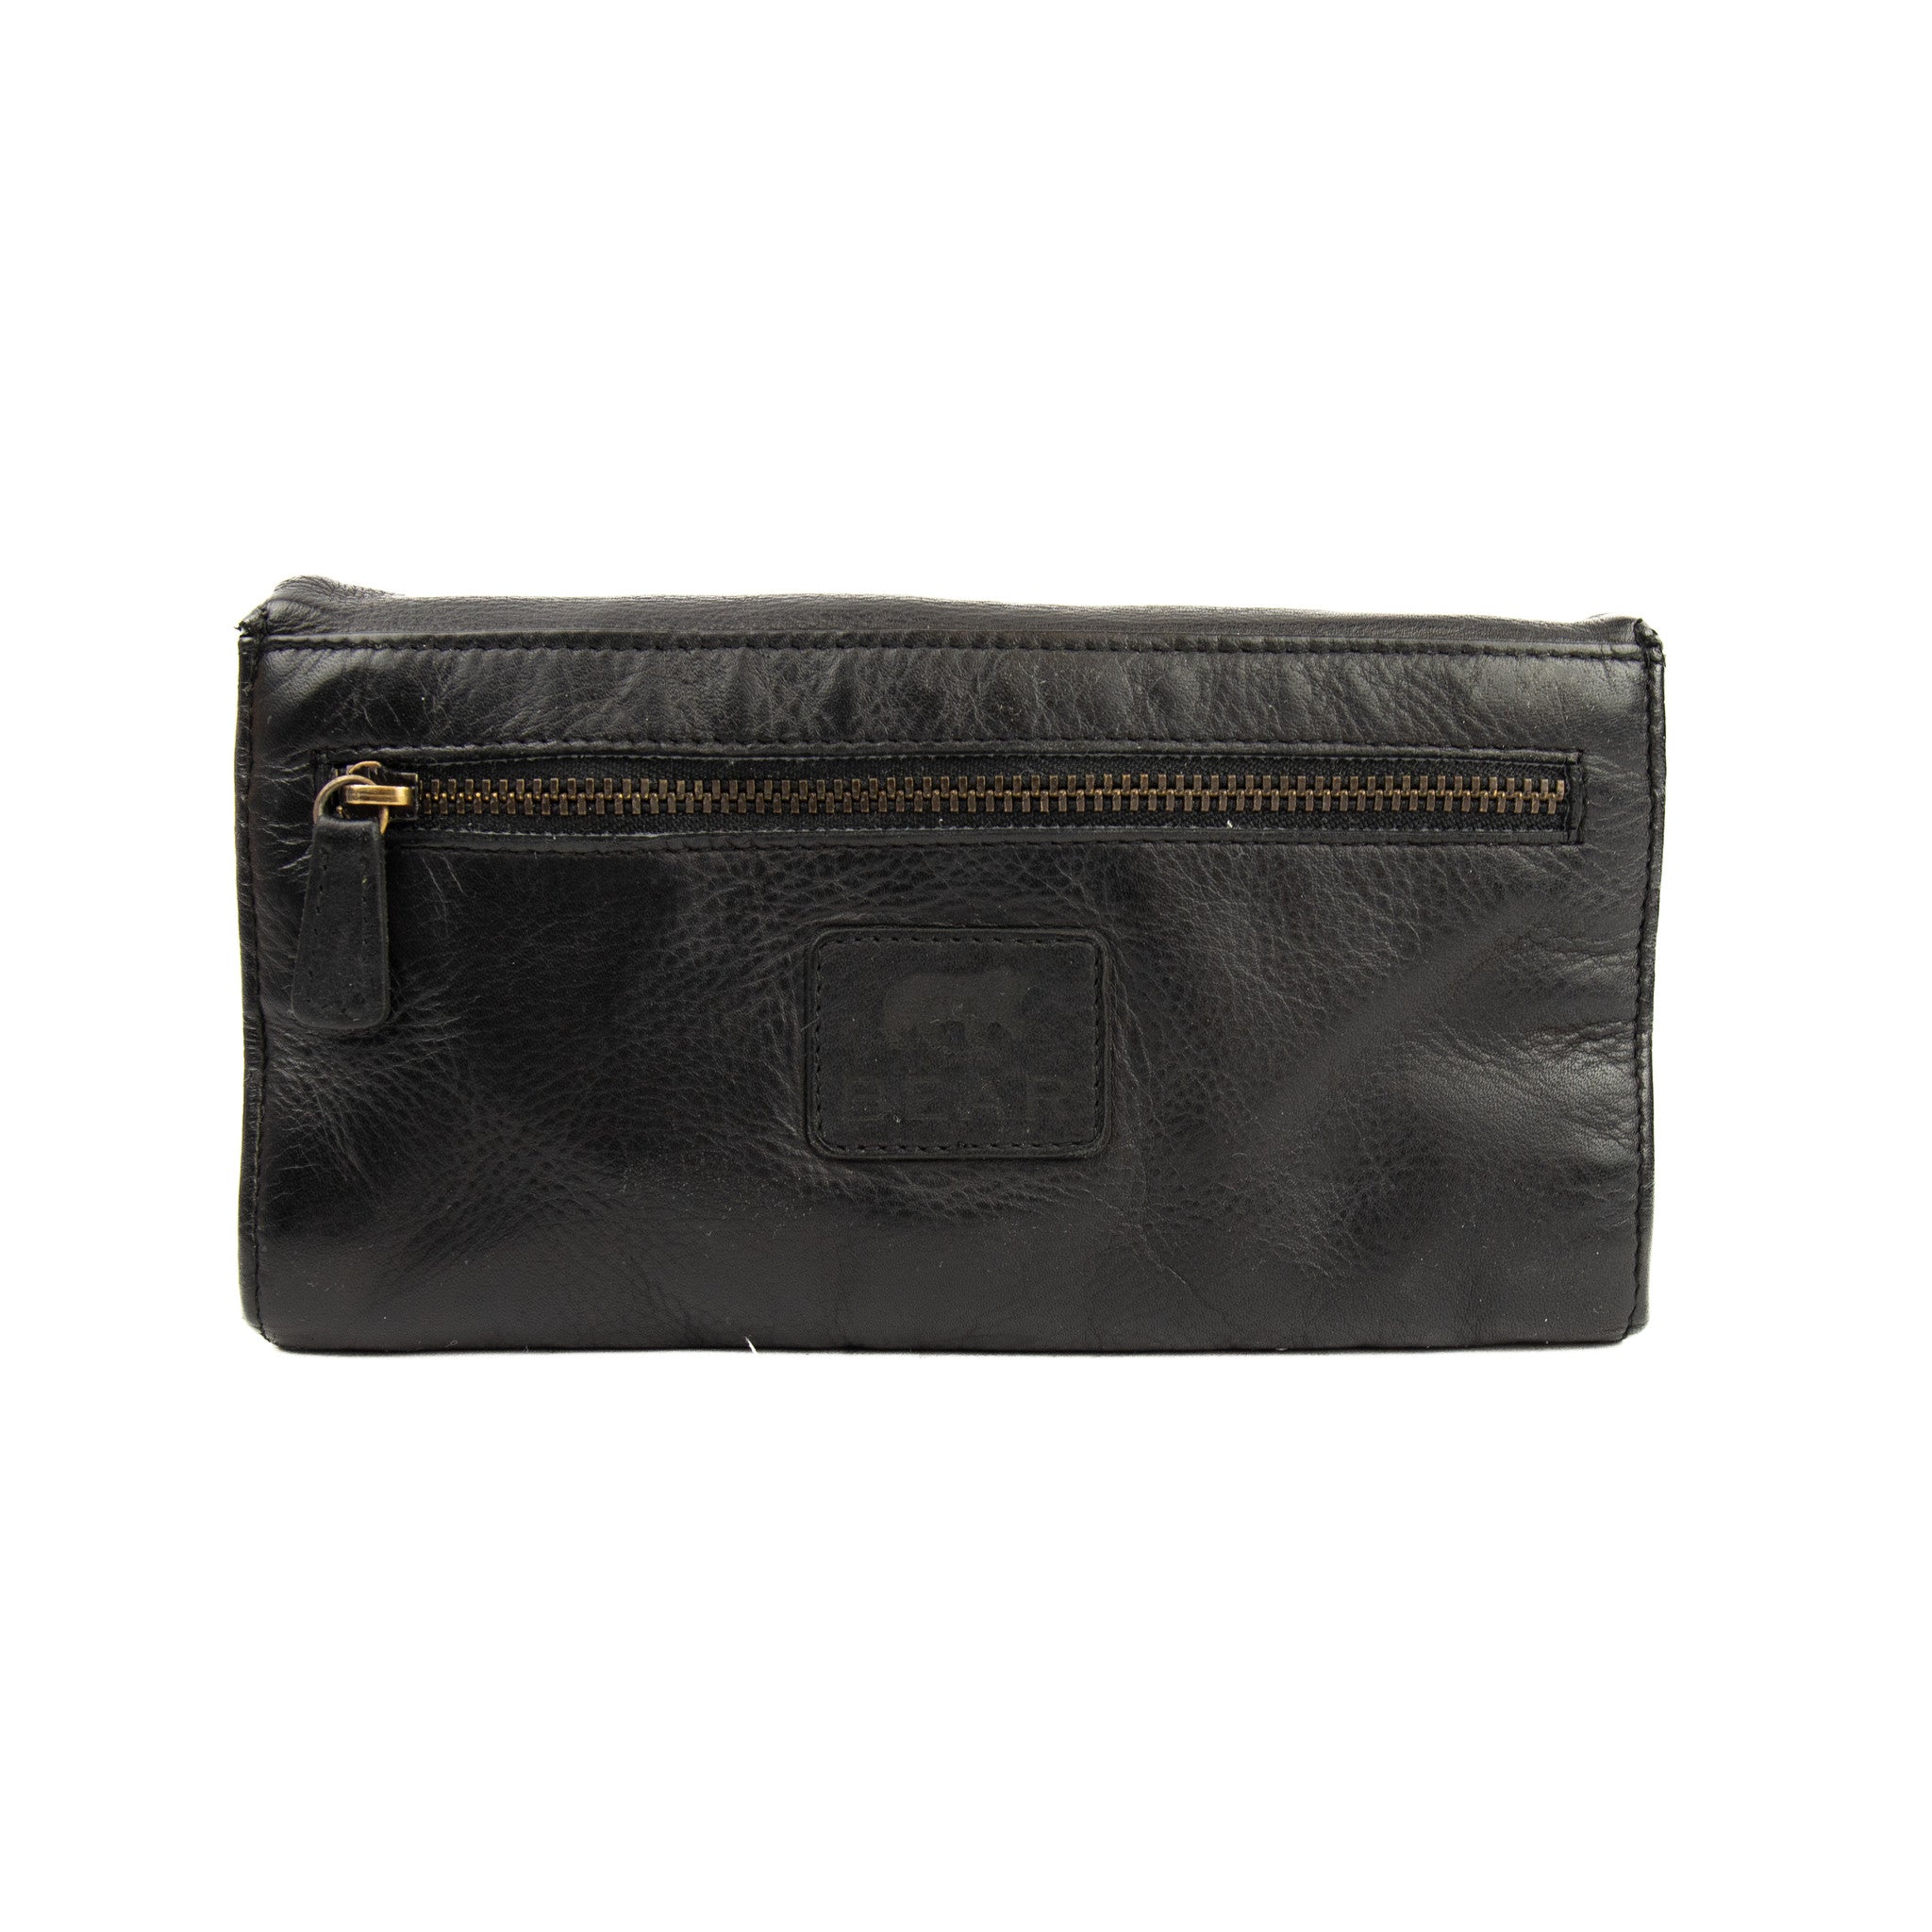 Wrap wallet 'Eloise' black - MJ 11530